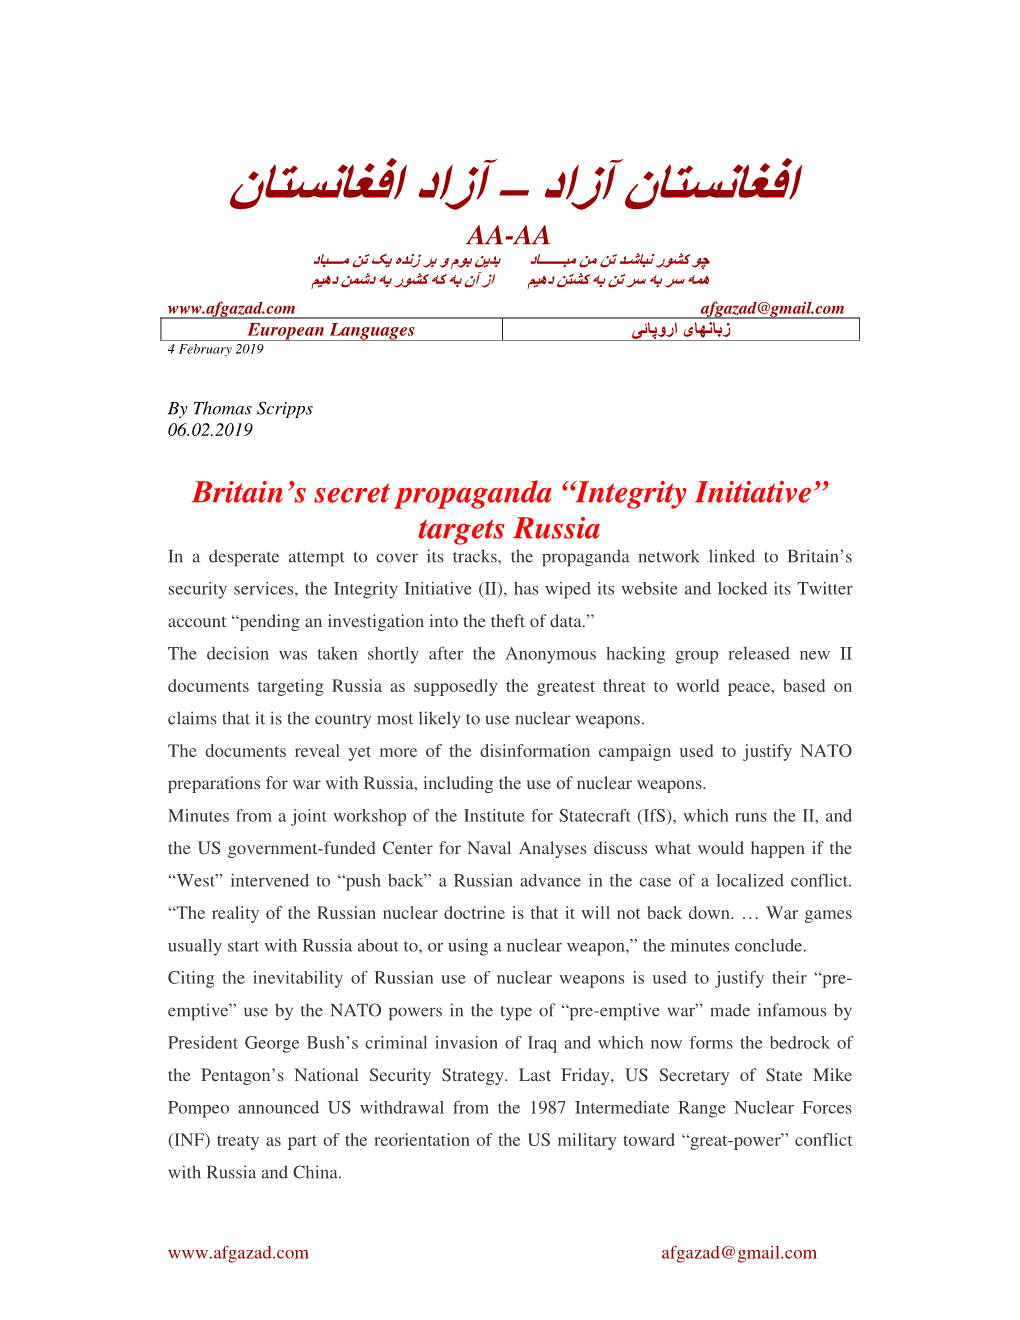 Britain's Secret Propaganda “Integrity Initiative” Targets